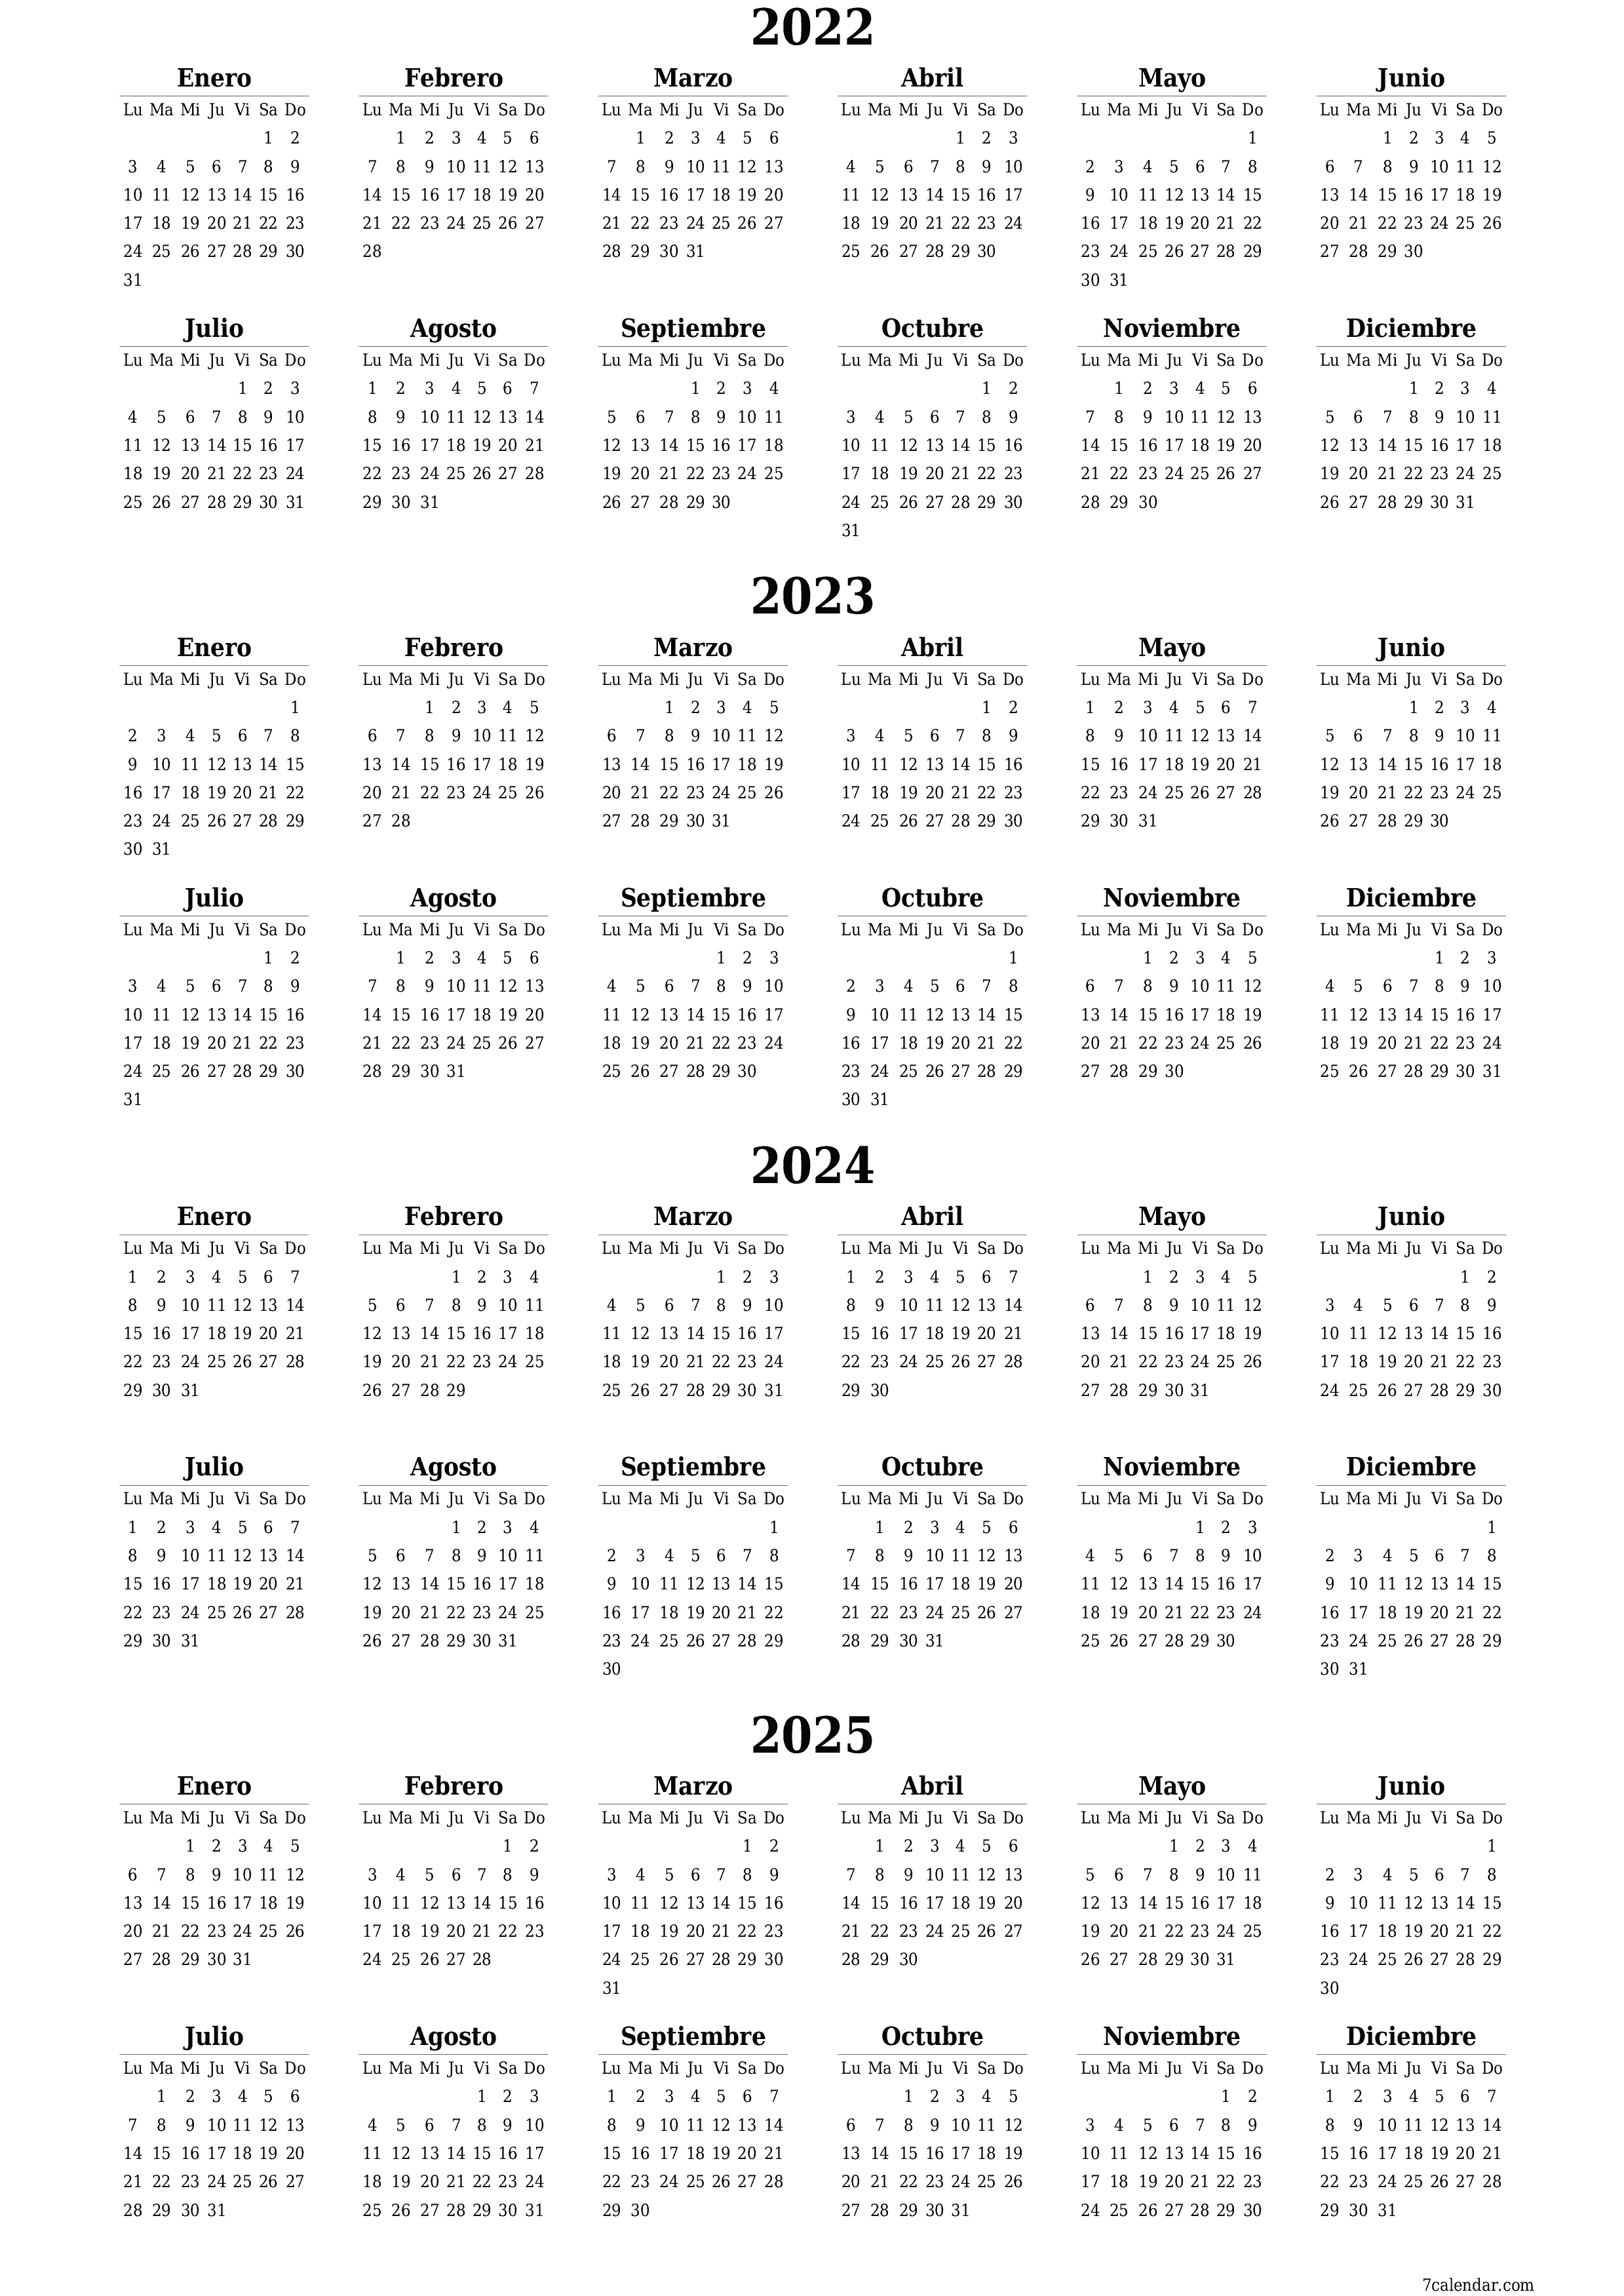  imprimible de pared plantilla de gratisvertical Anual calendario Junio (Jun) 2022